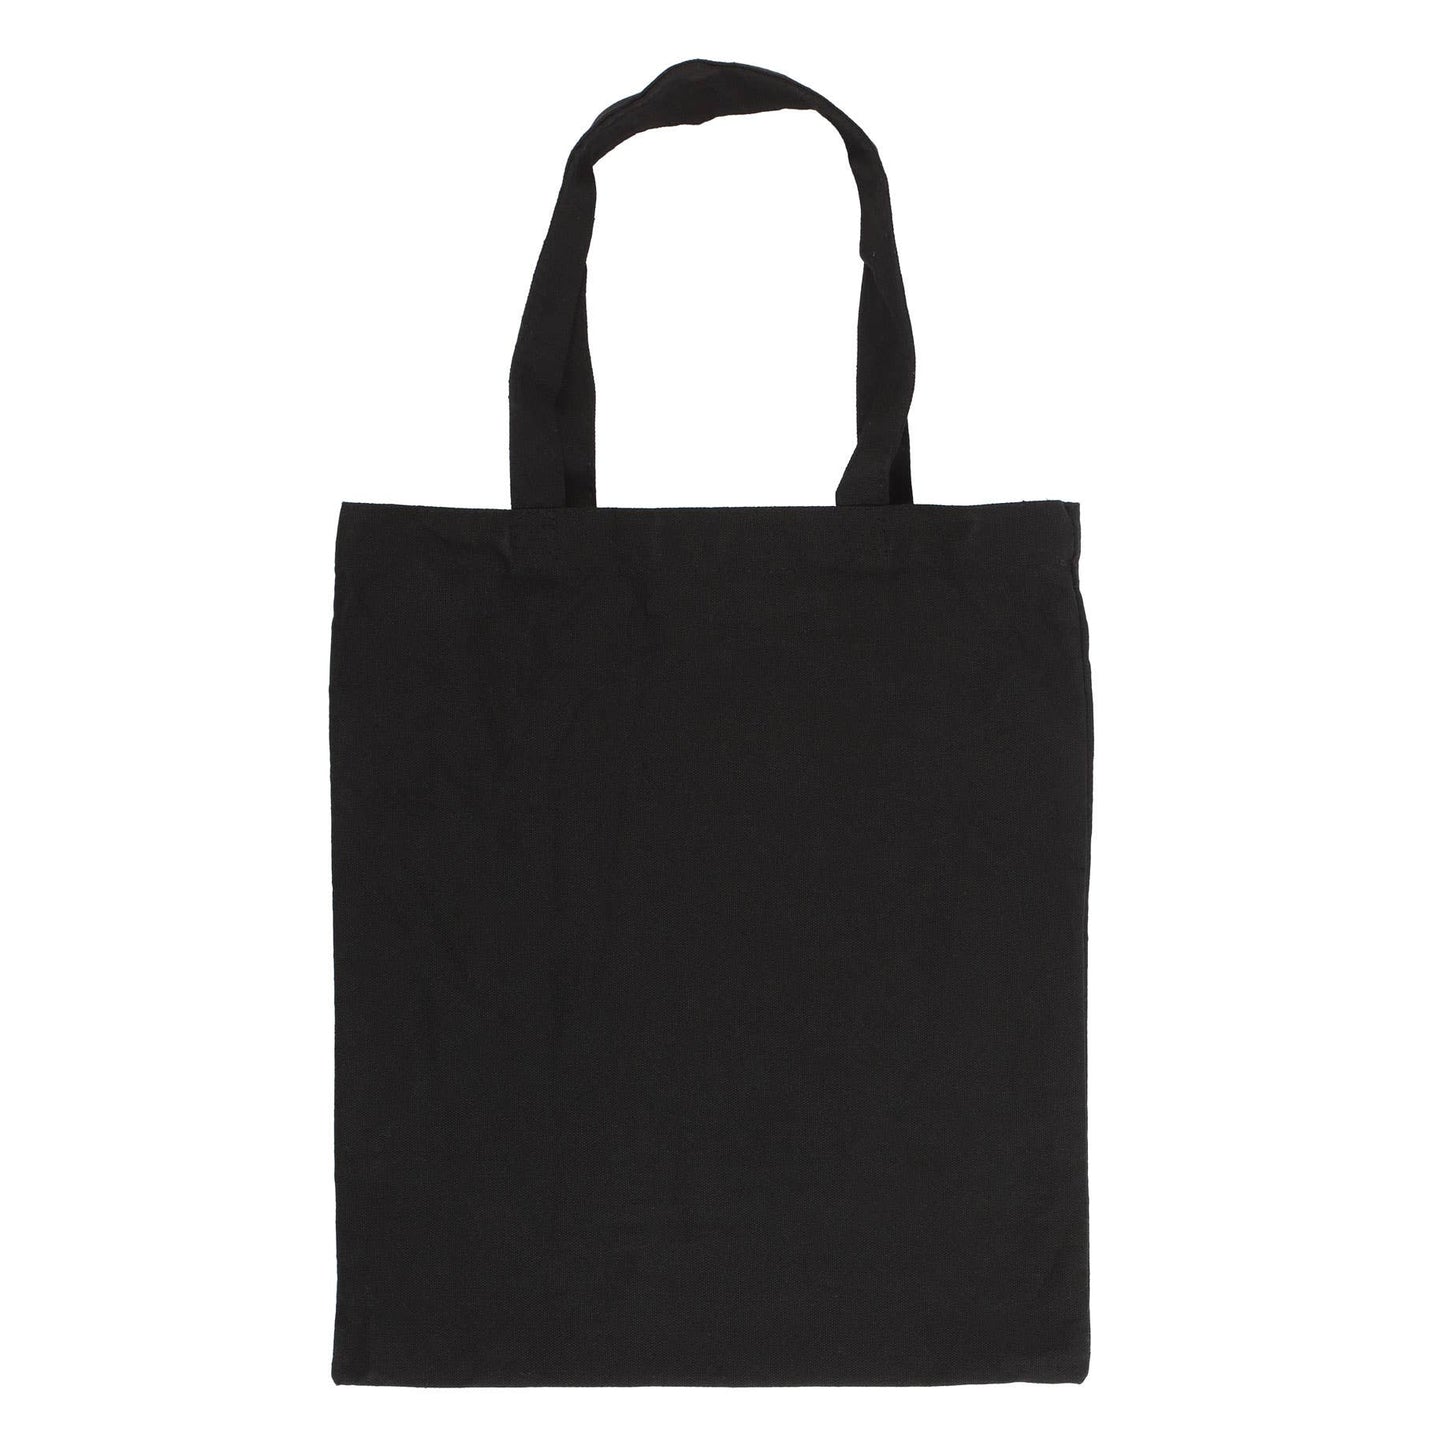 Dark Forest Print Tote Bag